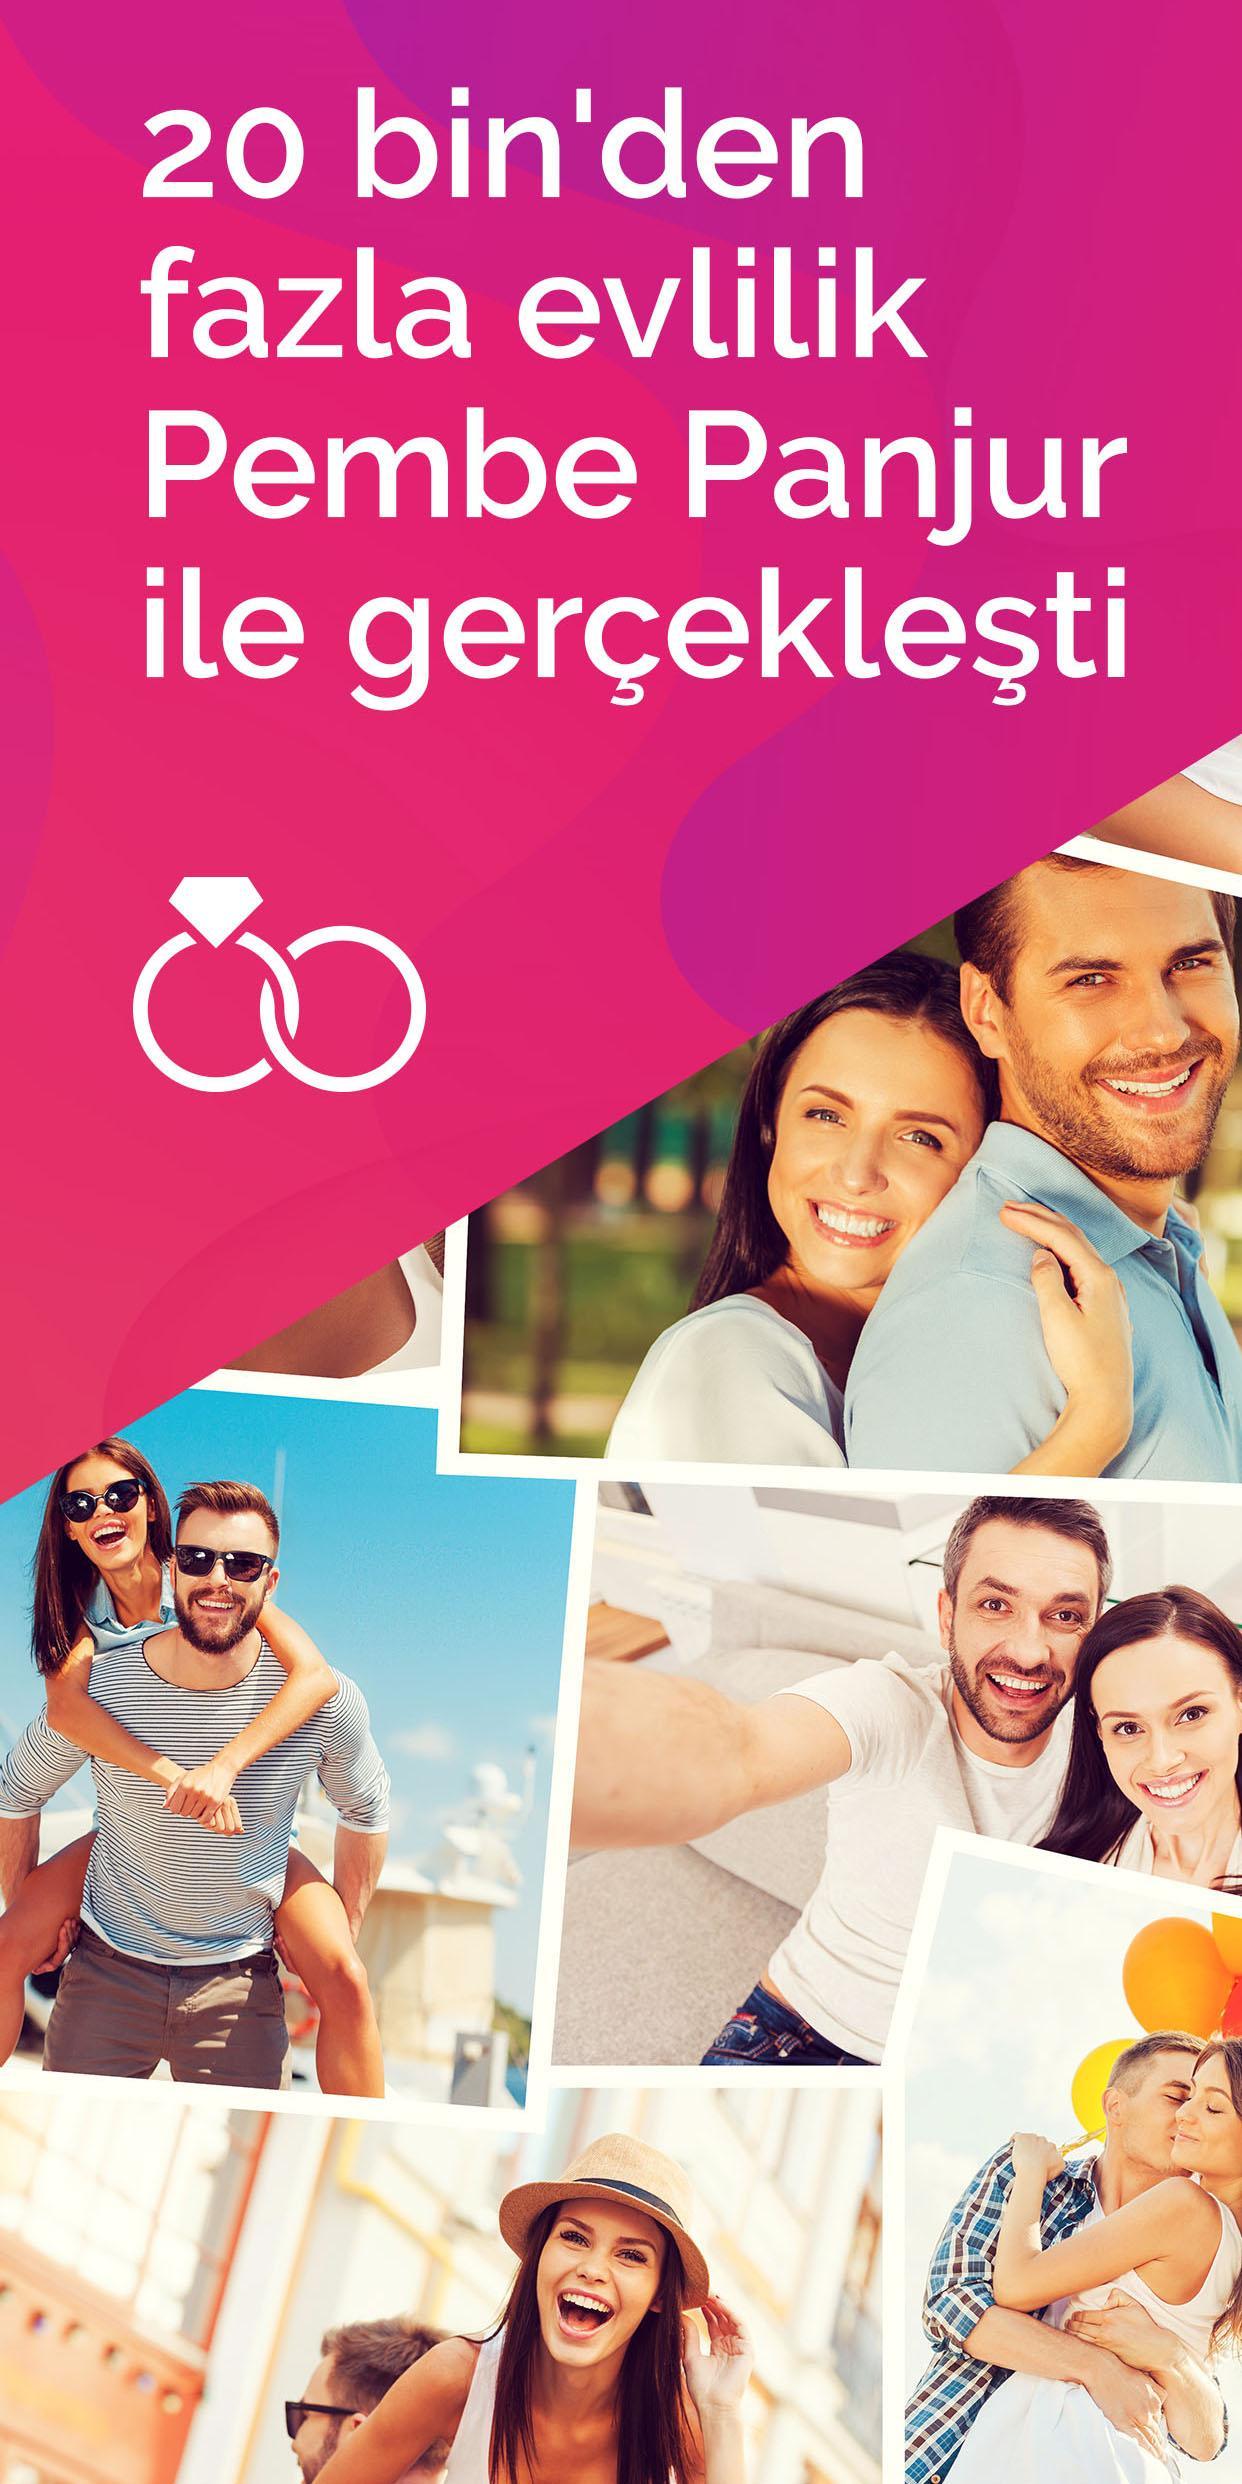 Dating and Chat for Turkish Singles - Pembepanjur 6.4.1 Screenshot 6